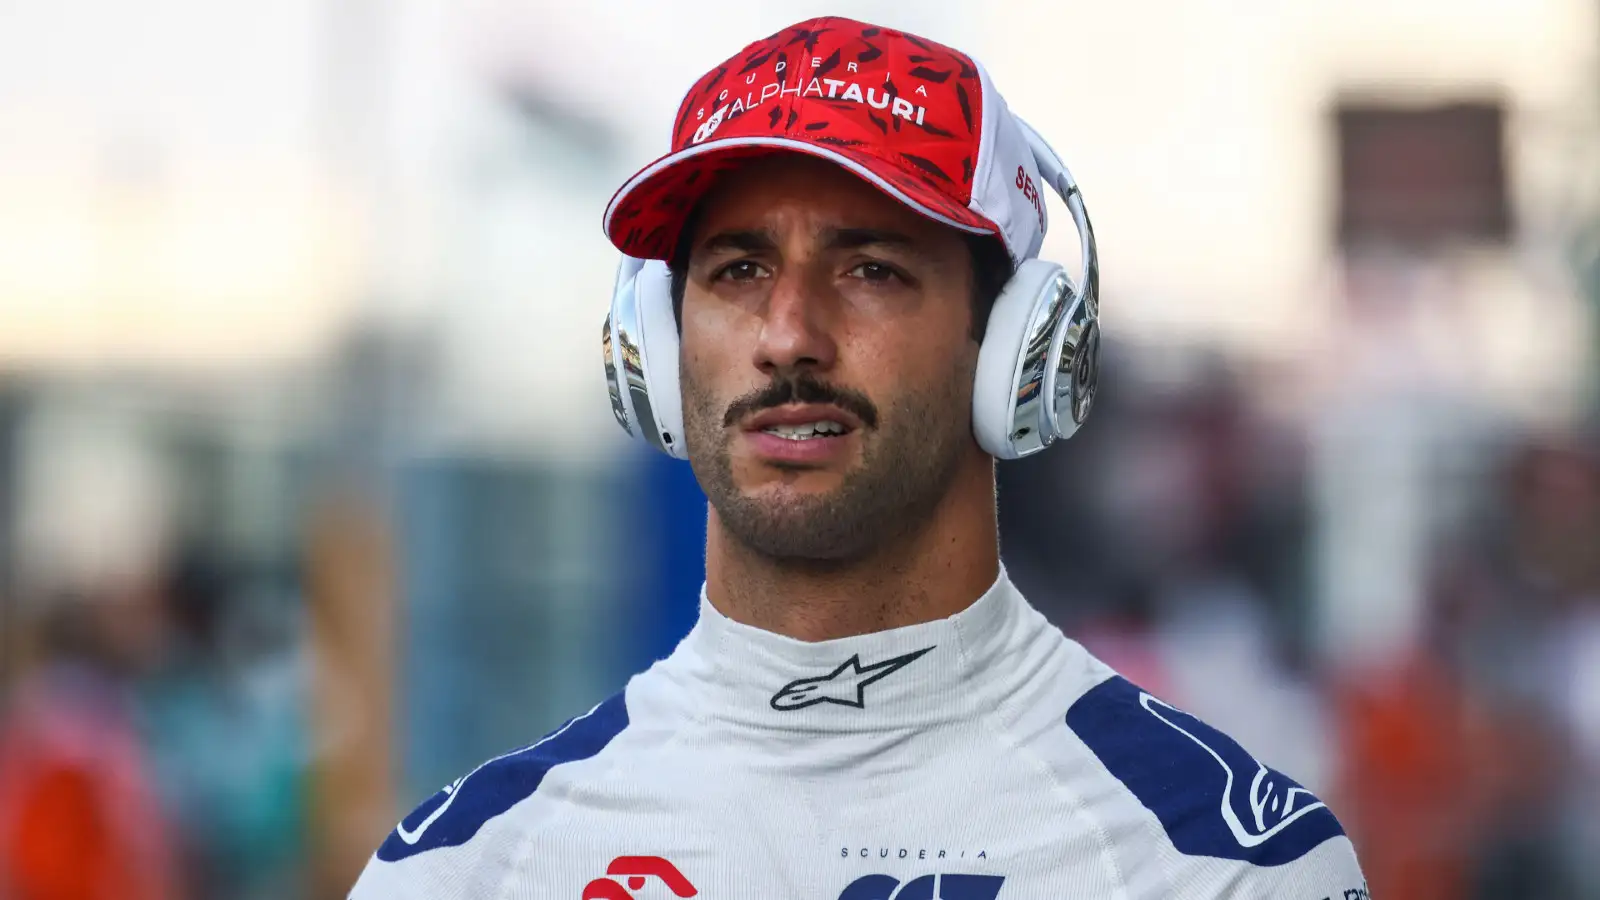 Daniel Ricciardo gears up for the Abu Dhabi Grand Prix.